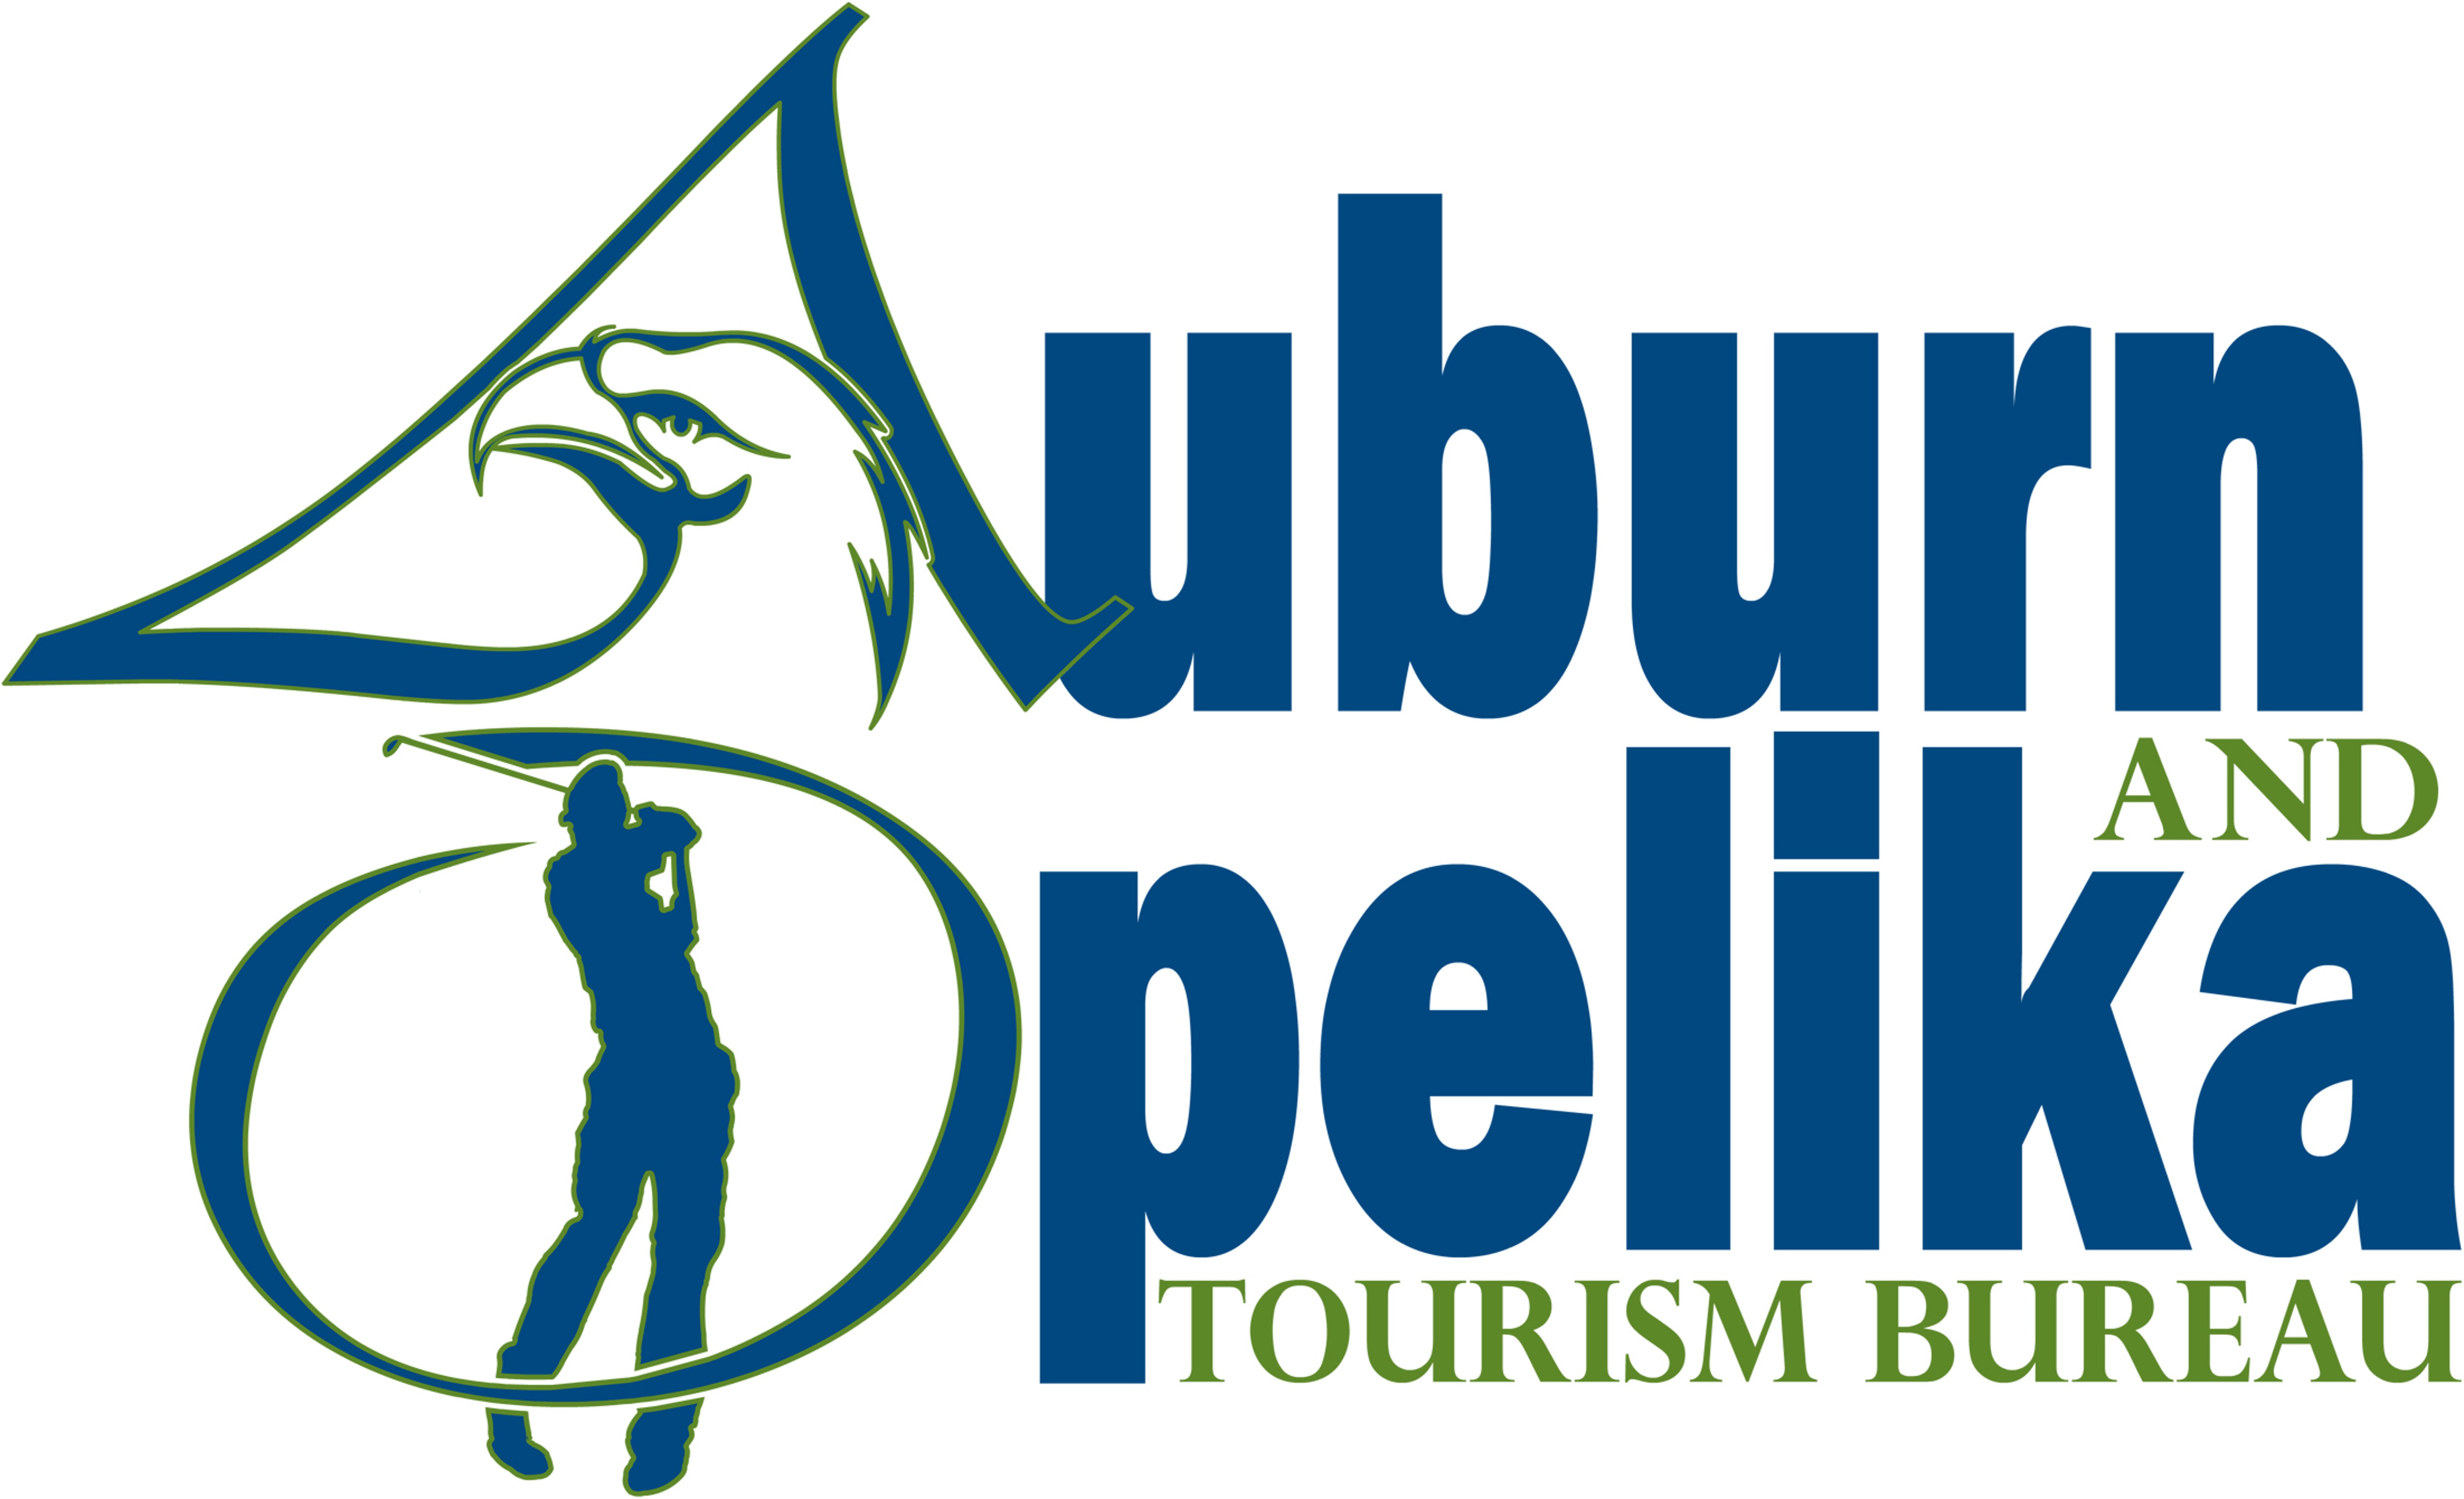 Auburn Opelika Tourism logo